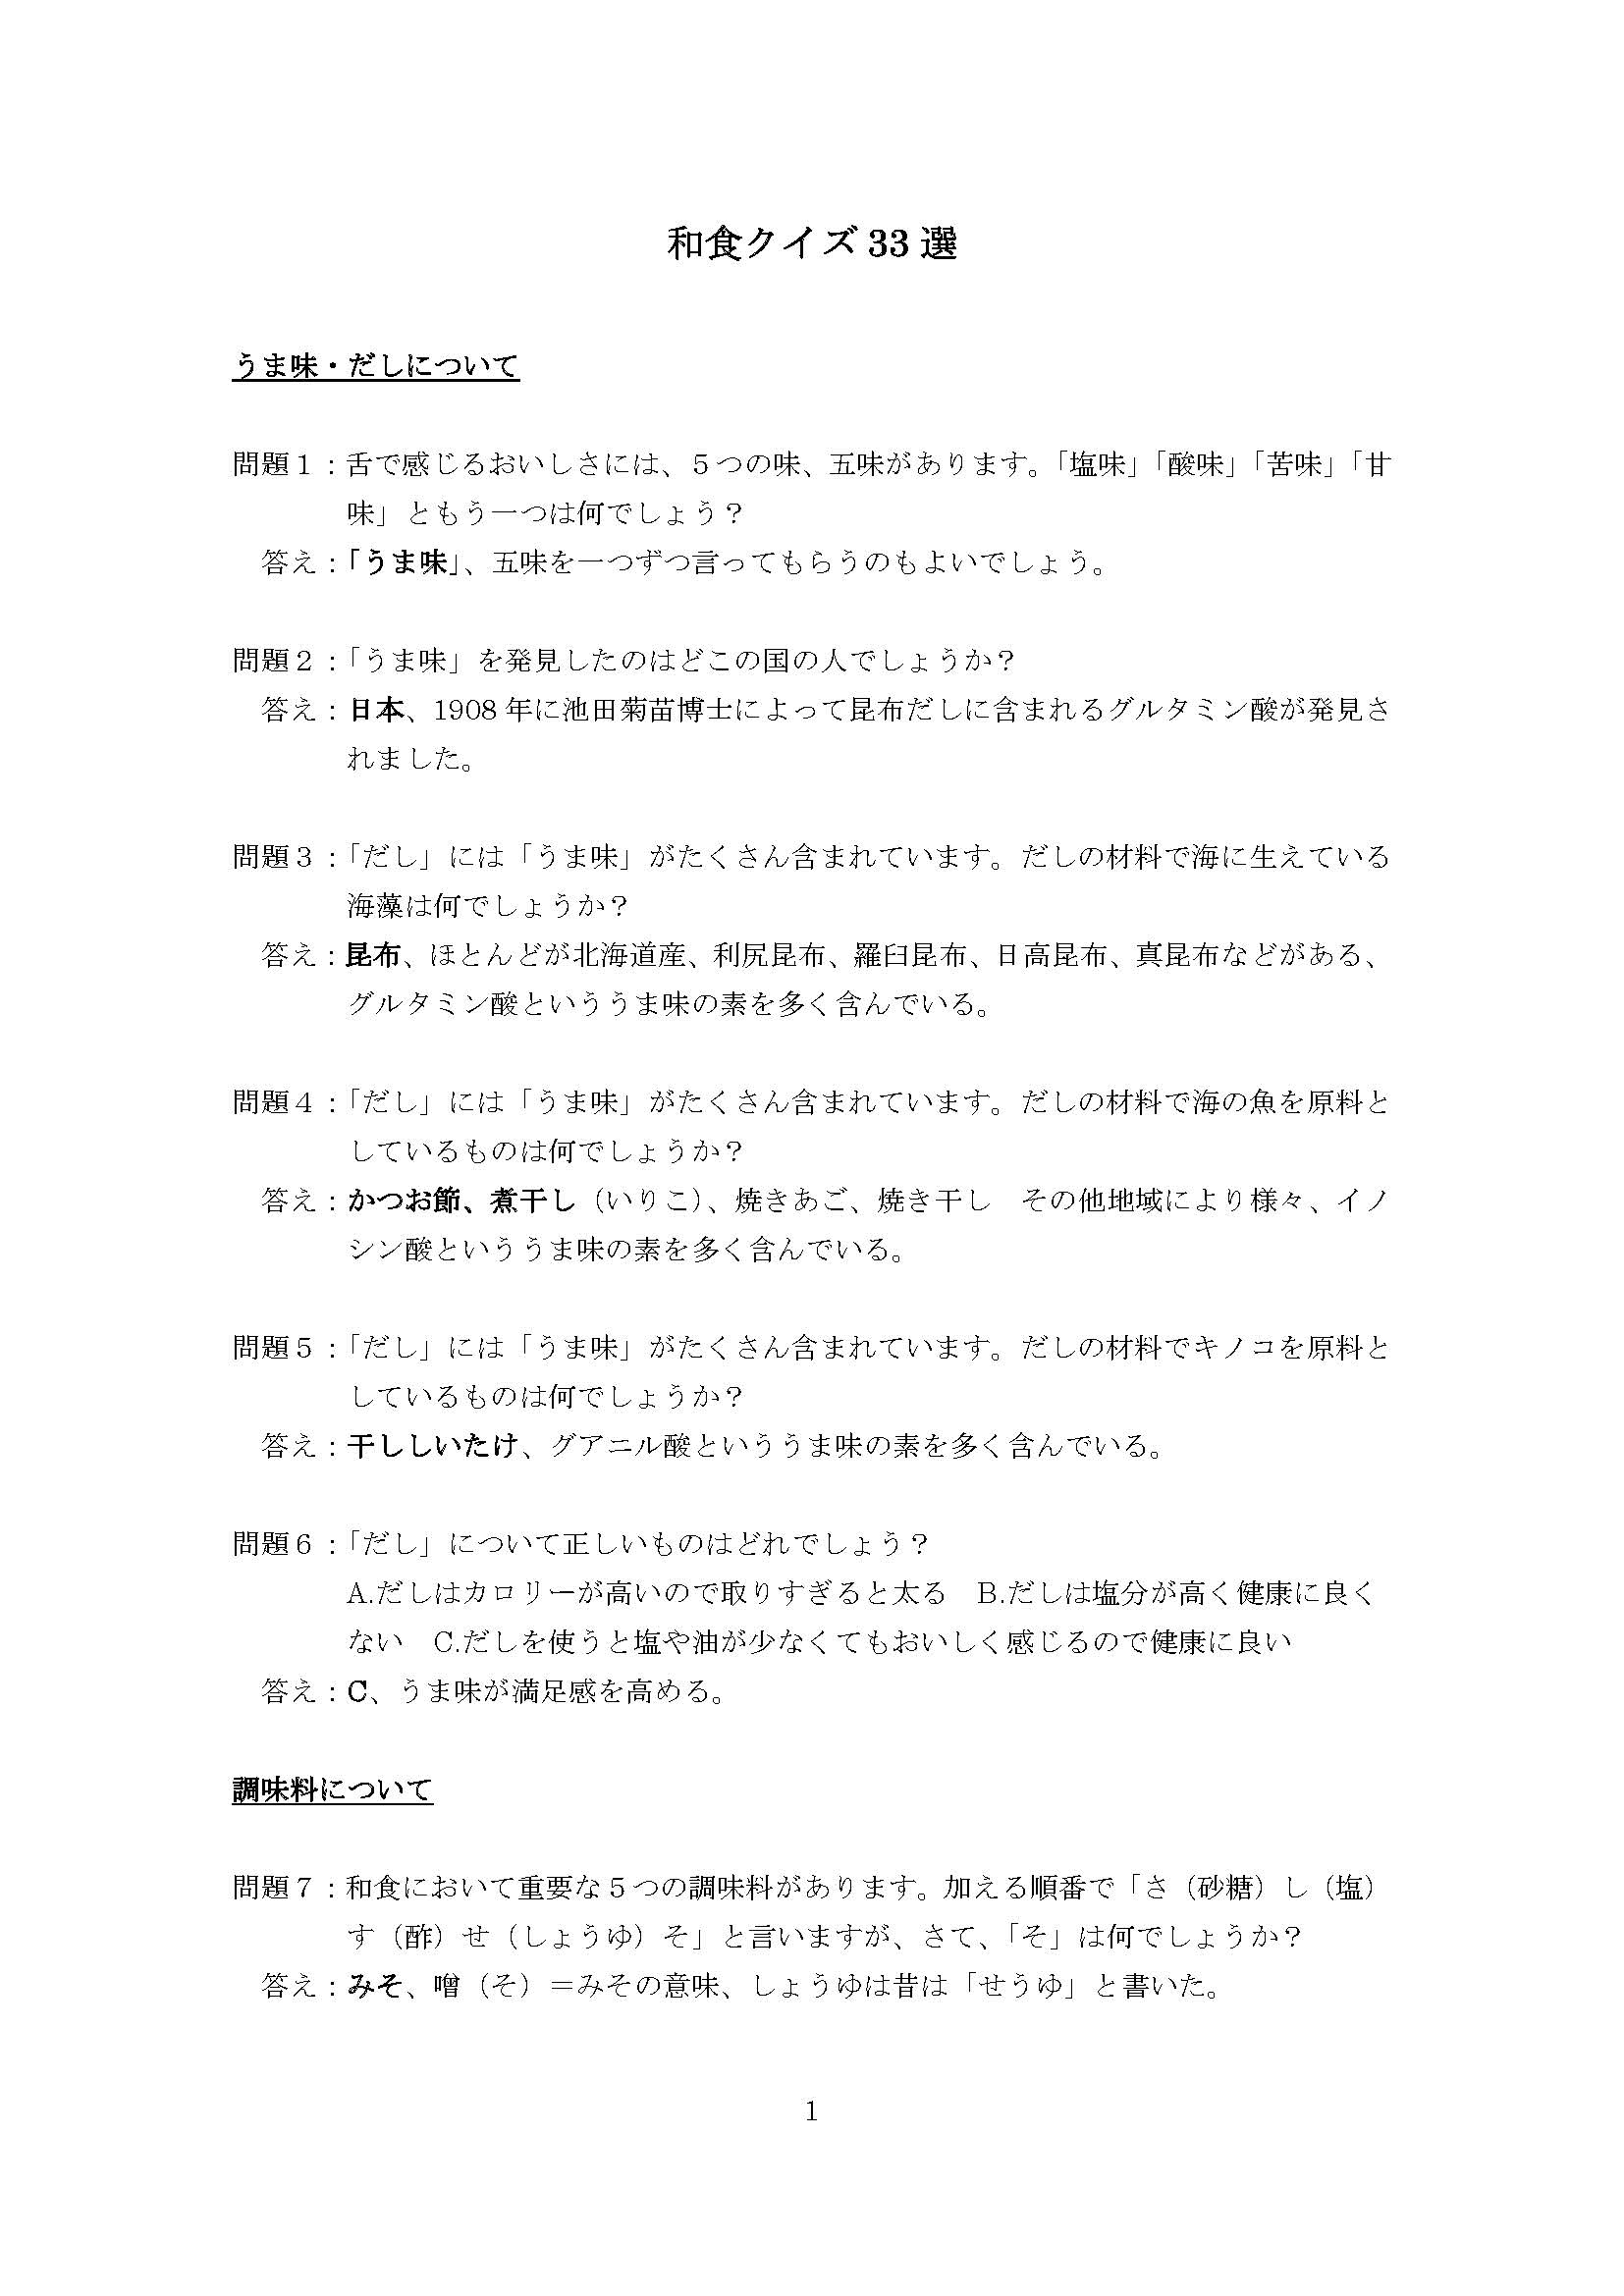 Quiz 一般社団法人和食文化国民会議 Washoku Japan